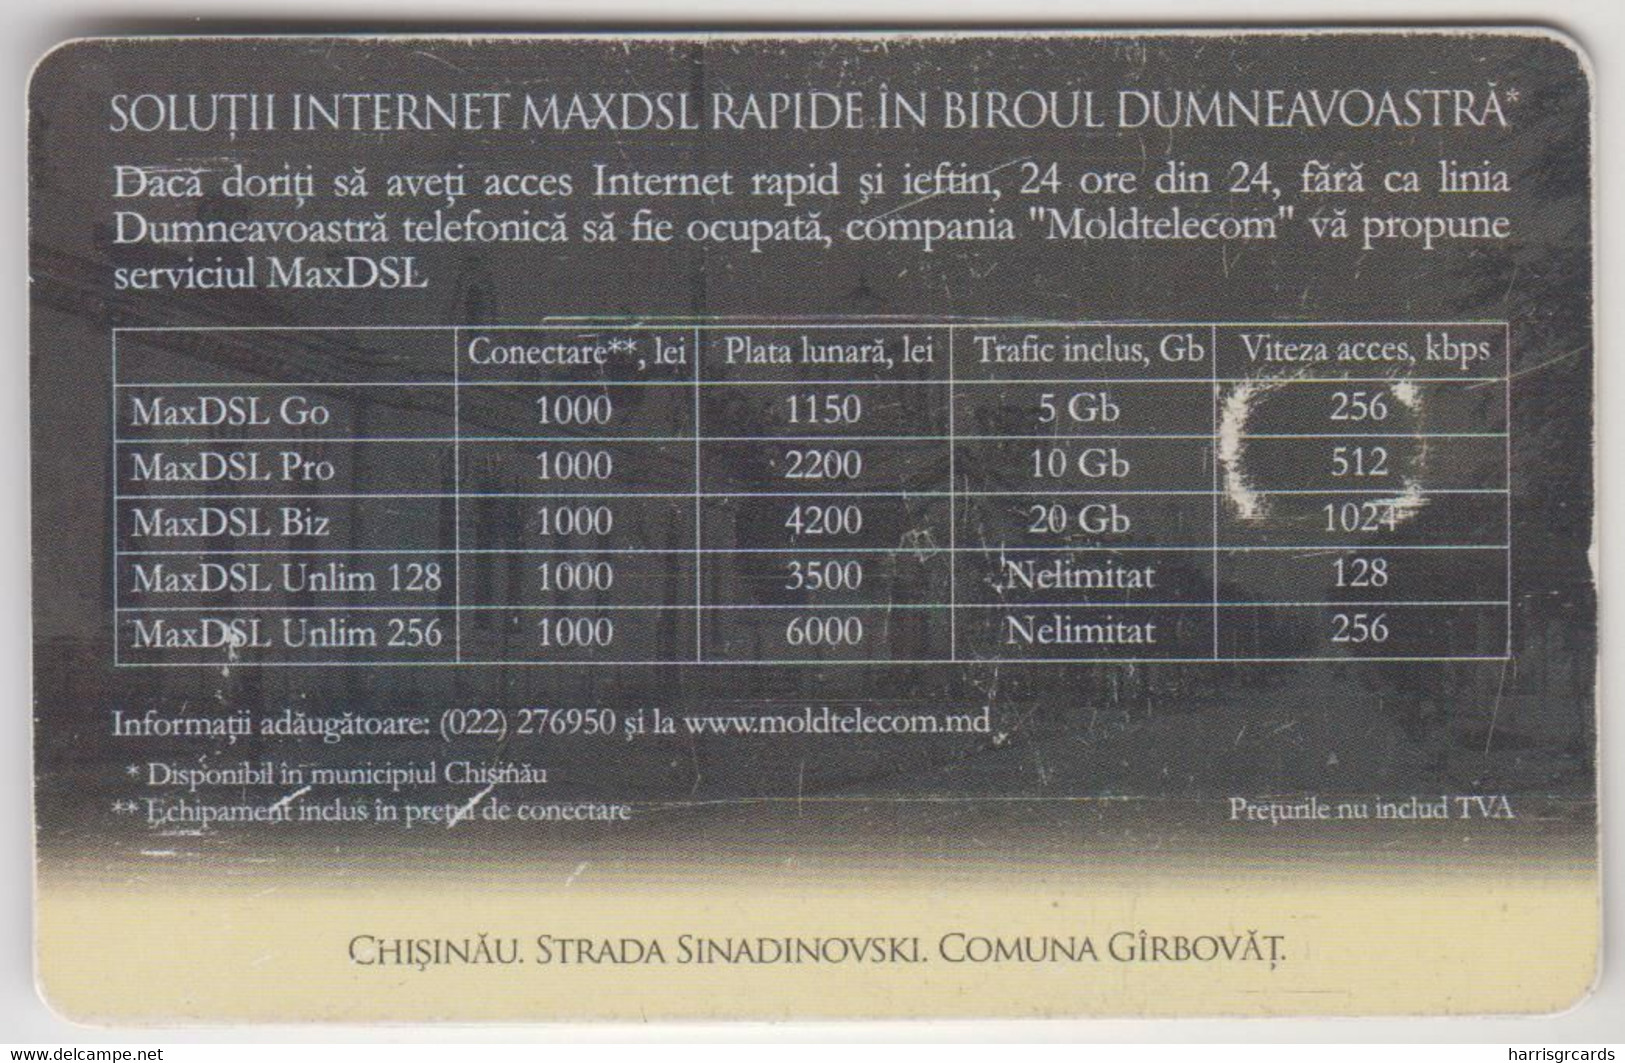 MOLDOVA - Strada Sinadinovski - Comunita Girbovat, Chip:CHT08, Moldtelecom 200 Units, 05/05, Tirage 10.000,used - Moldova